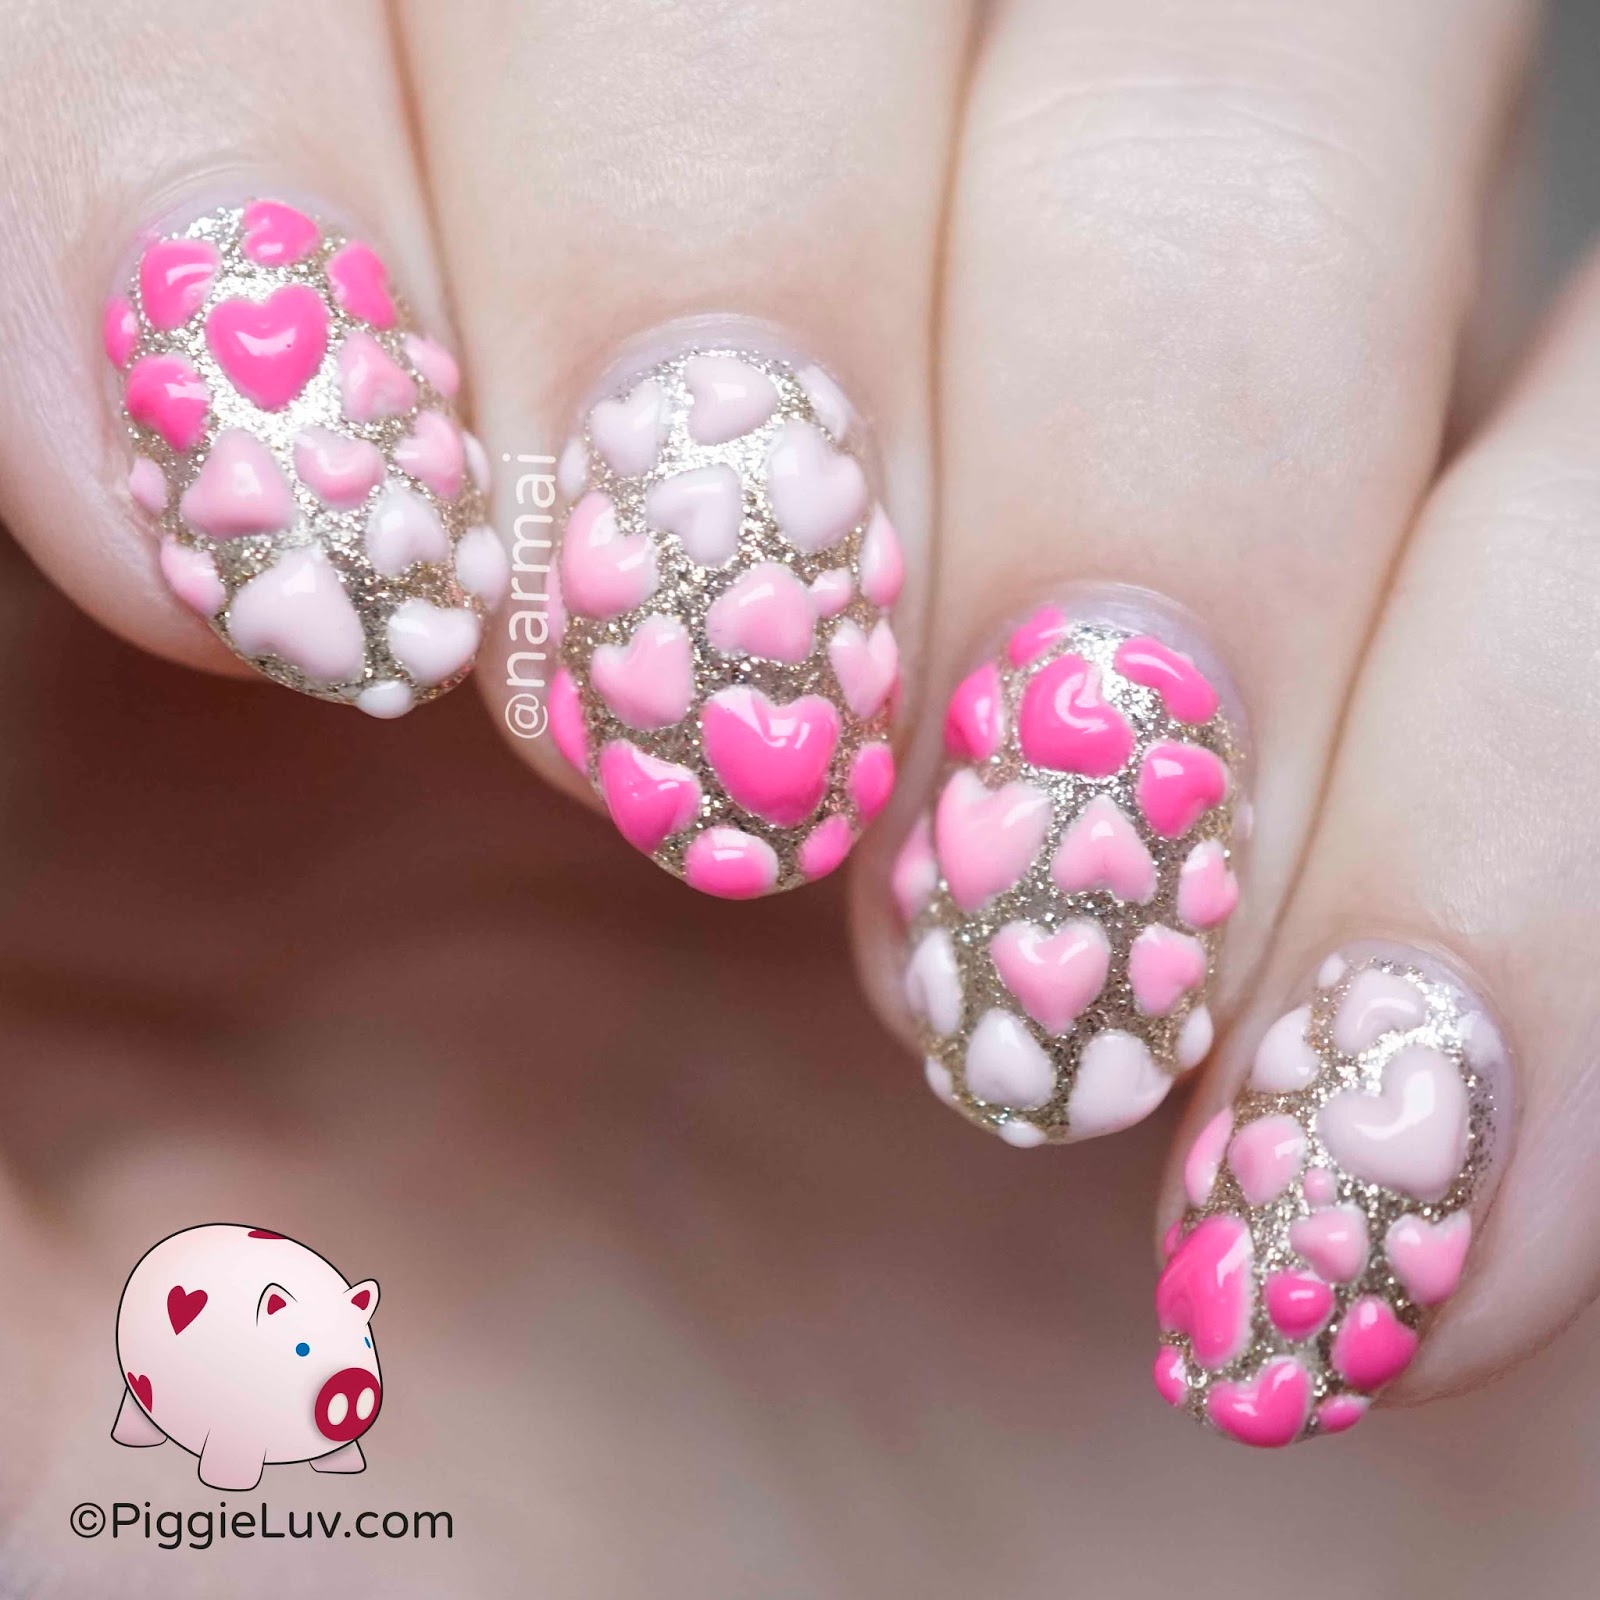 PiggieLuv 3D hearts nail art for Valentine's Day